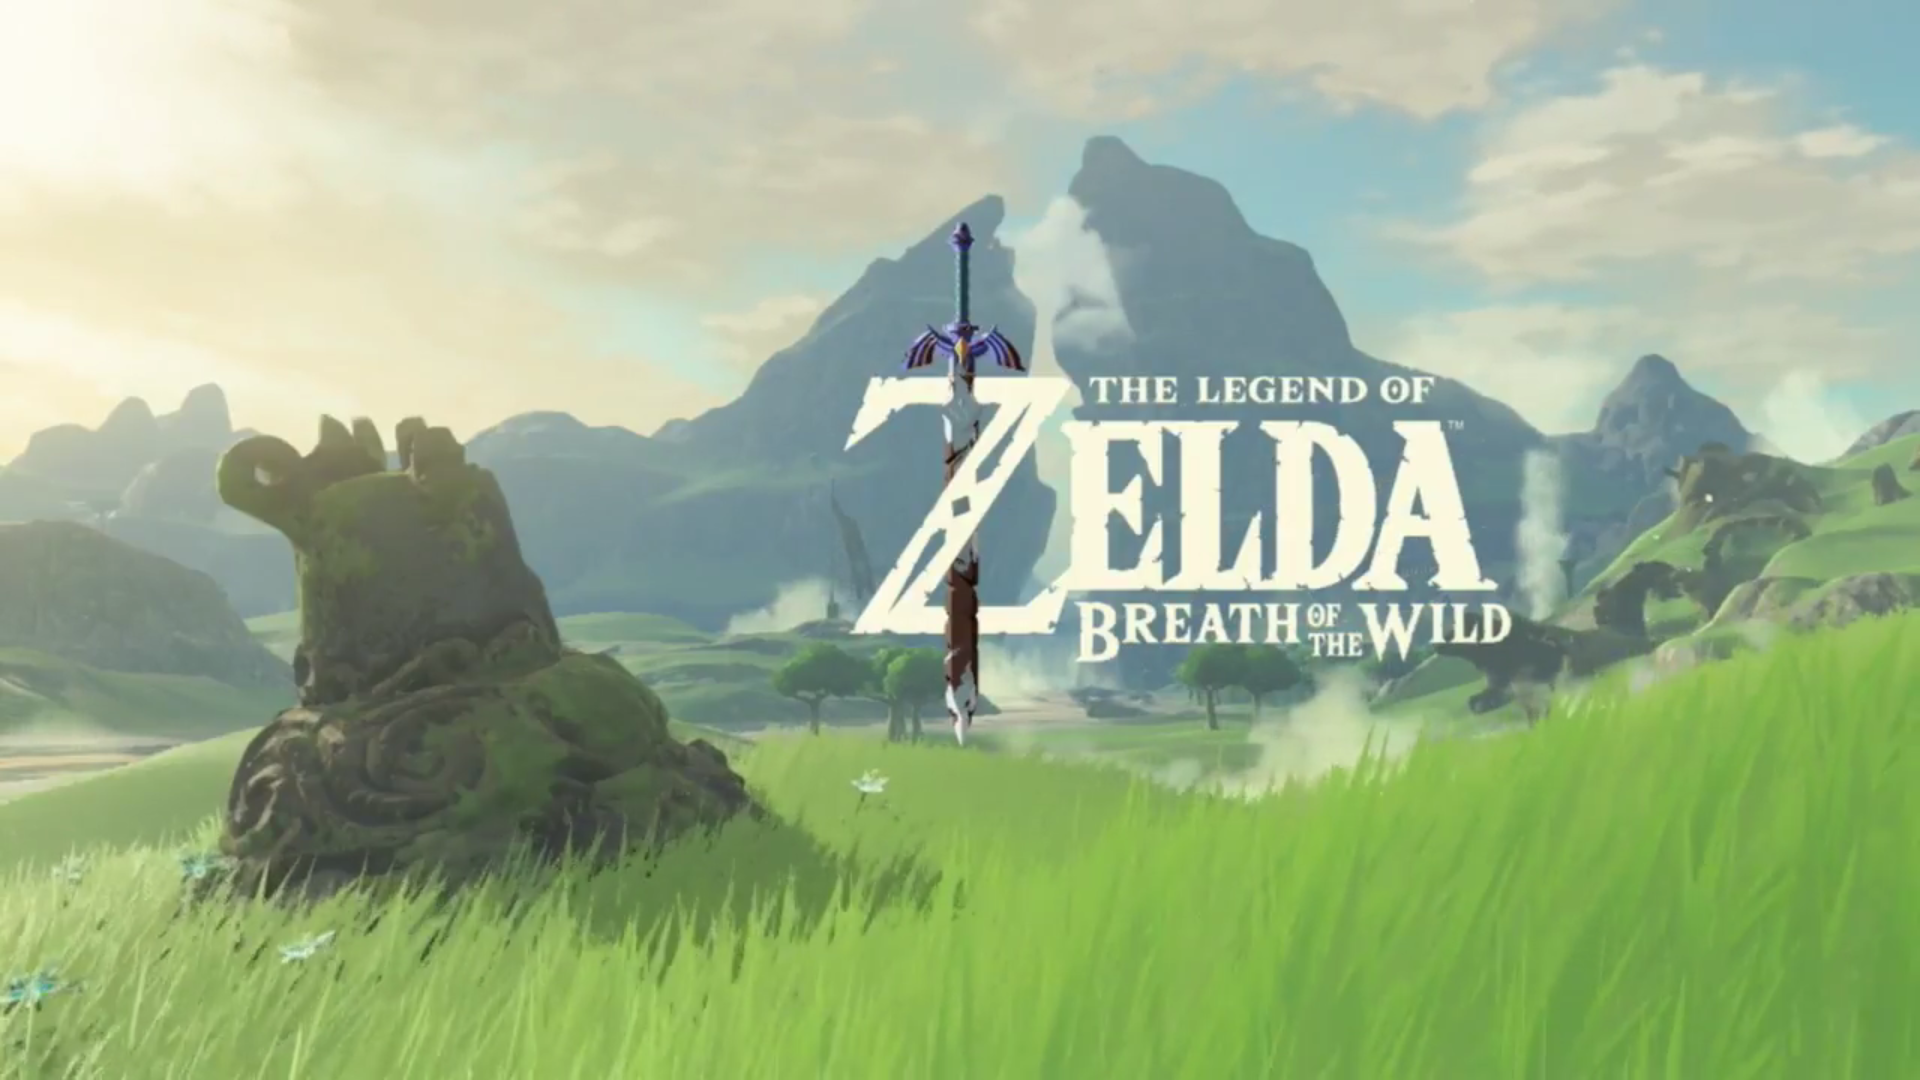 Image for Nintendo reveals The Legend of Zelda: Breath of the Wild